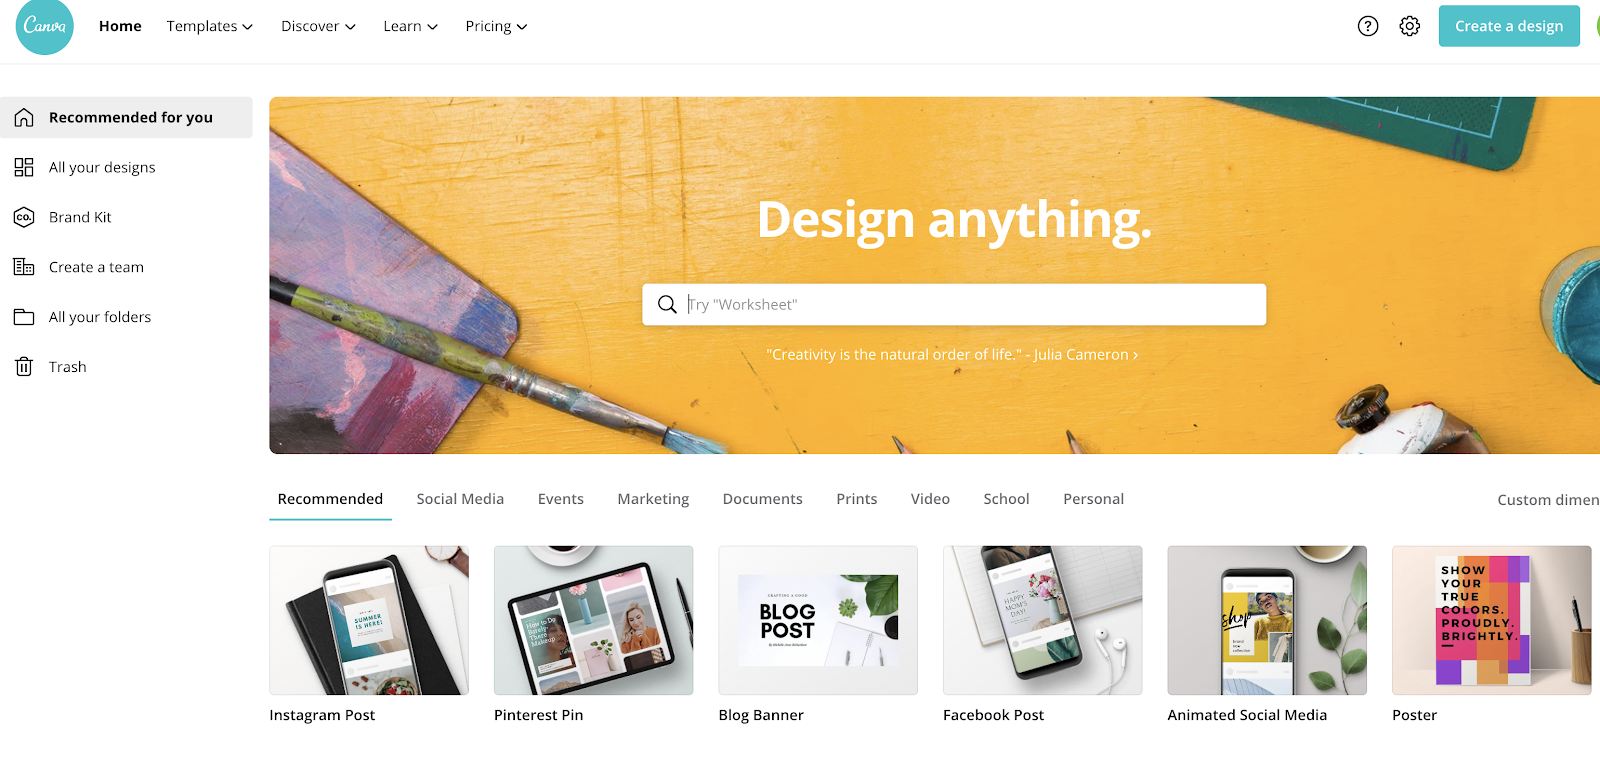 Canva Design Tool for Creating Blog Images (Screenshot)